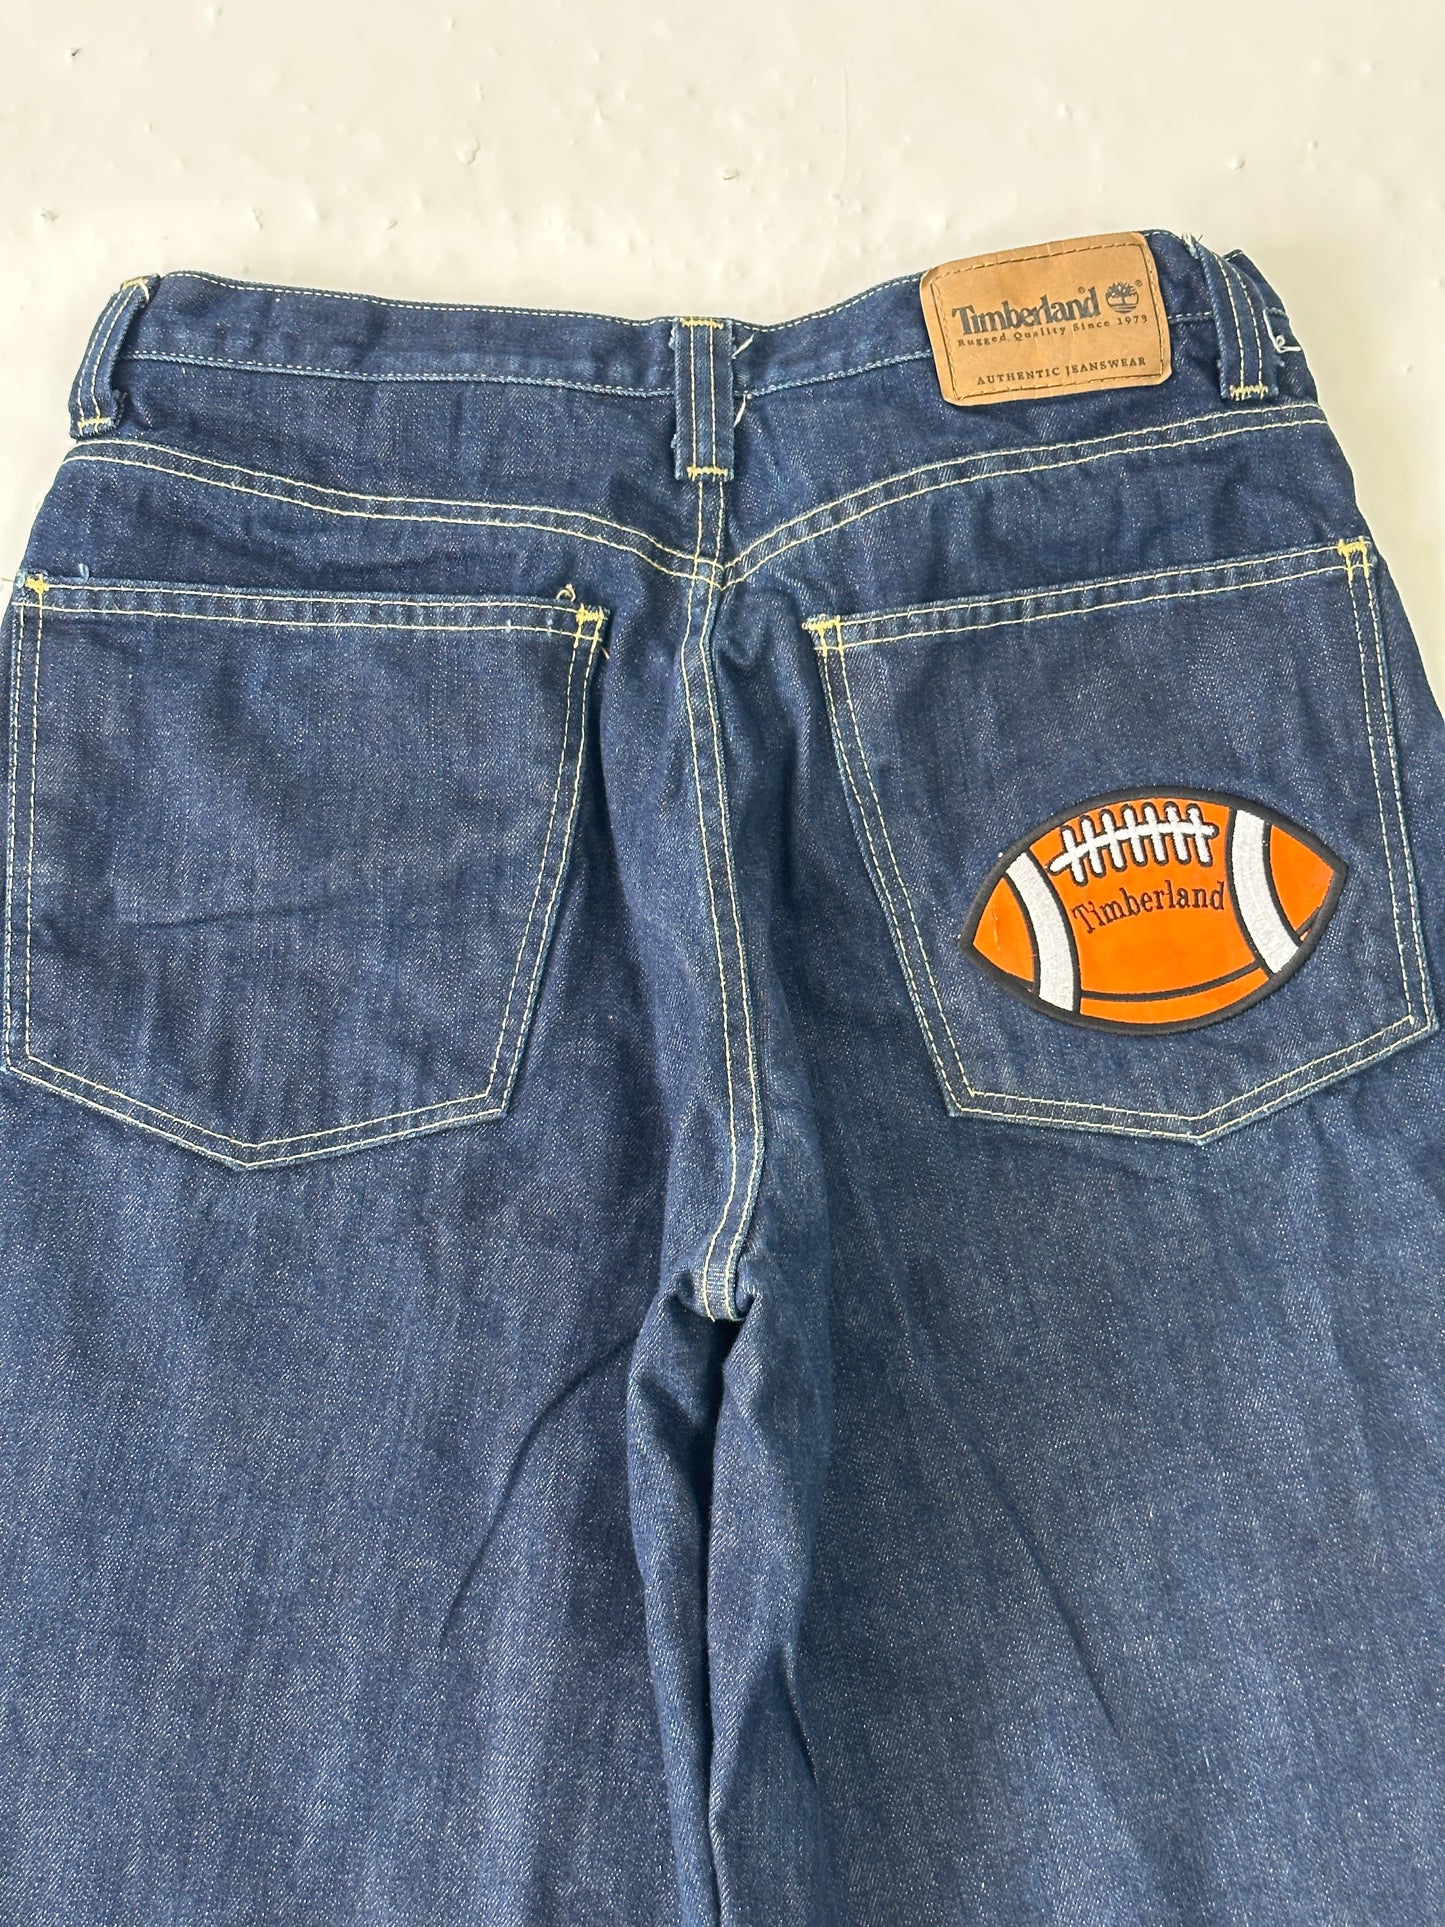 Timberland Fooball Vintage Baggy Shorts - 34